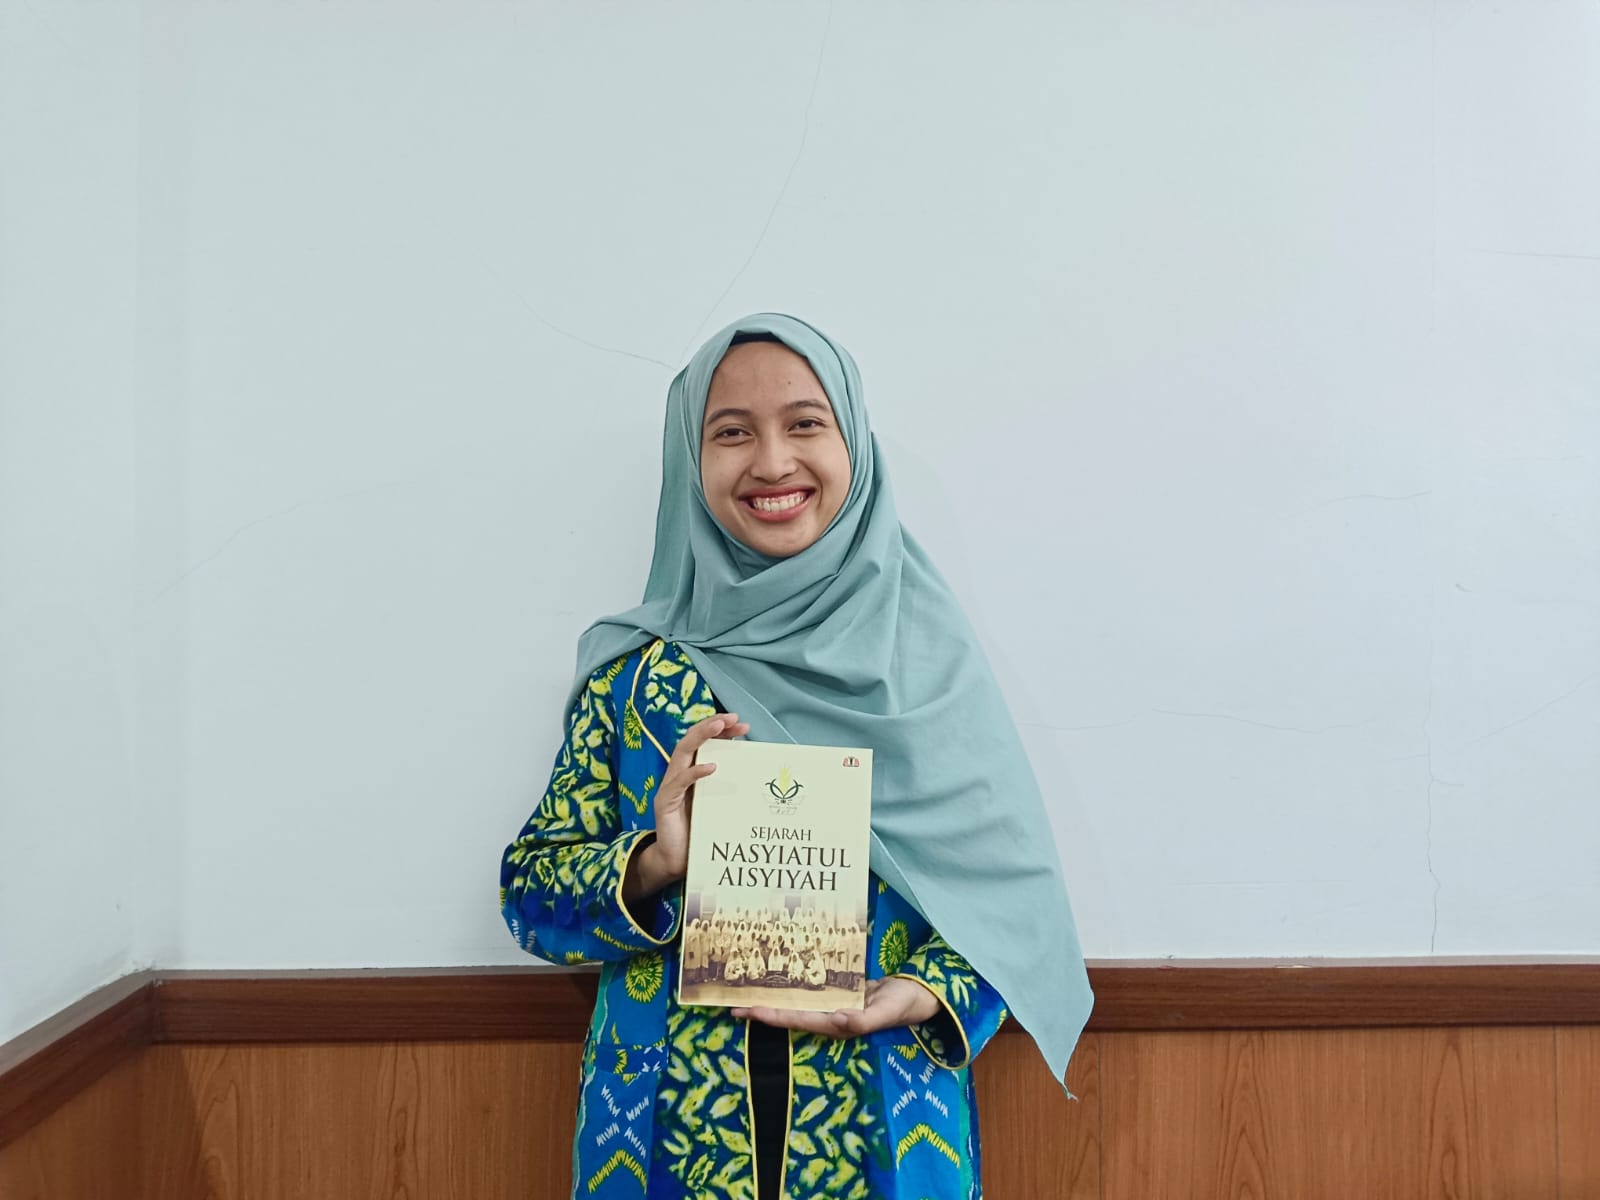 Muktamar Nasyiatul Aisyiyah - Launching Buku